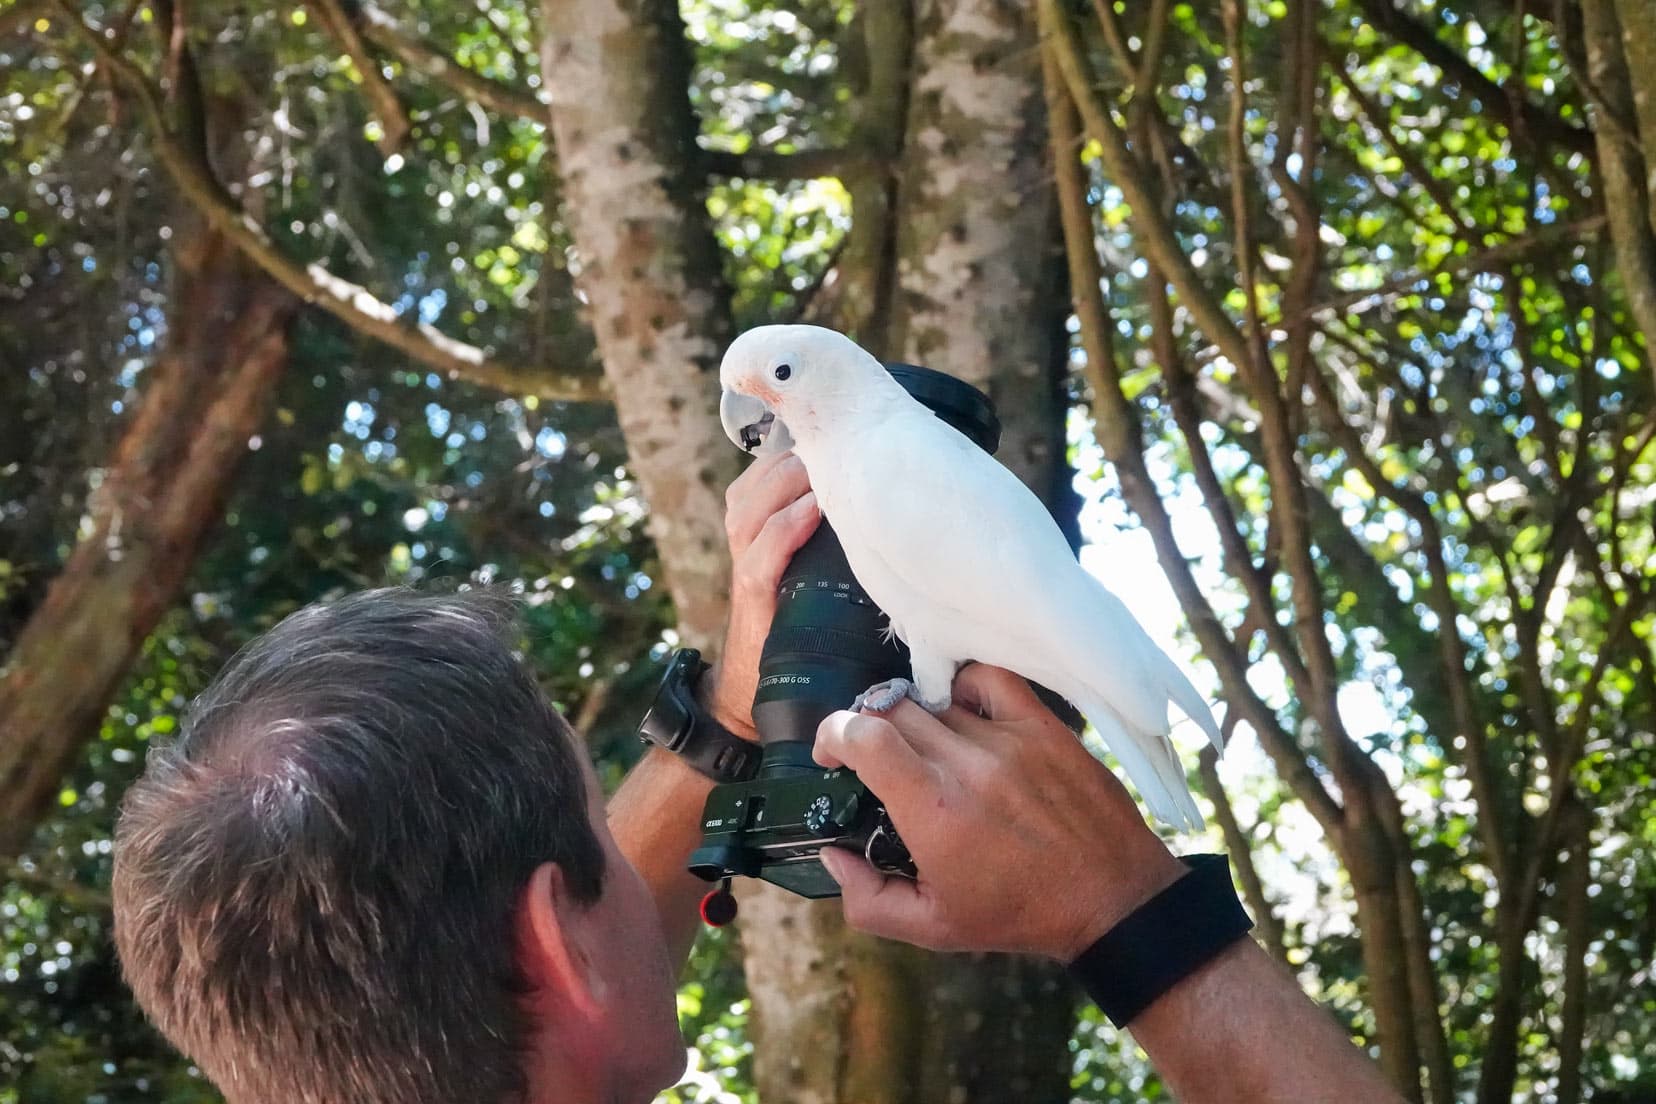 cockatoos-and-camera-eye-cup-in-cockatoos-beak-